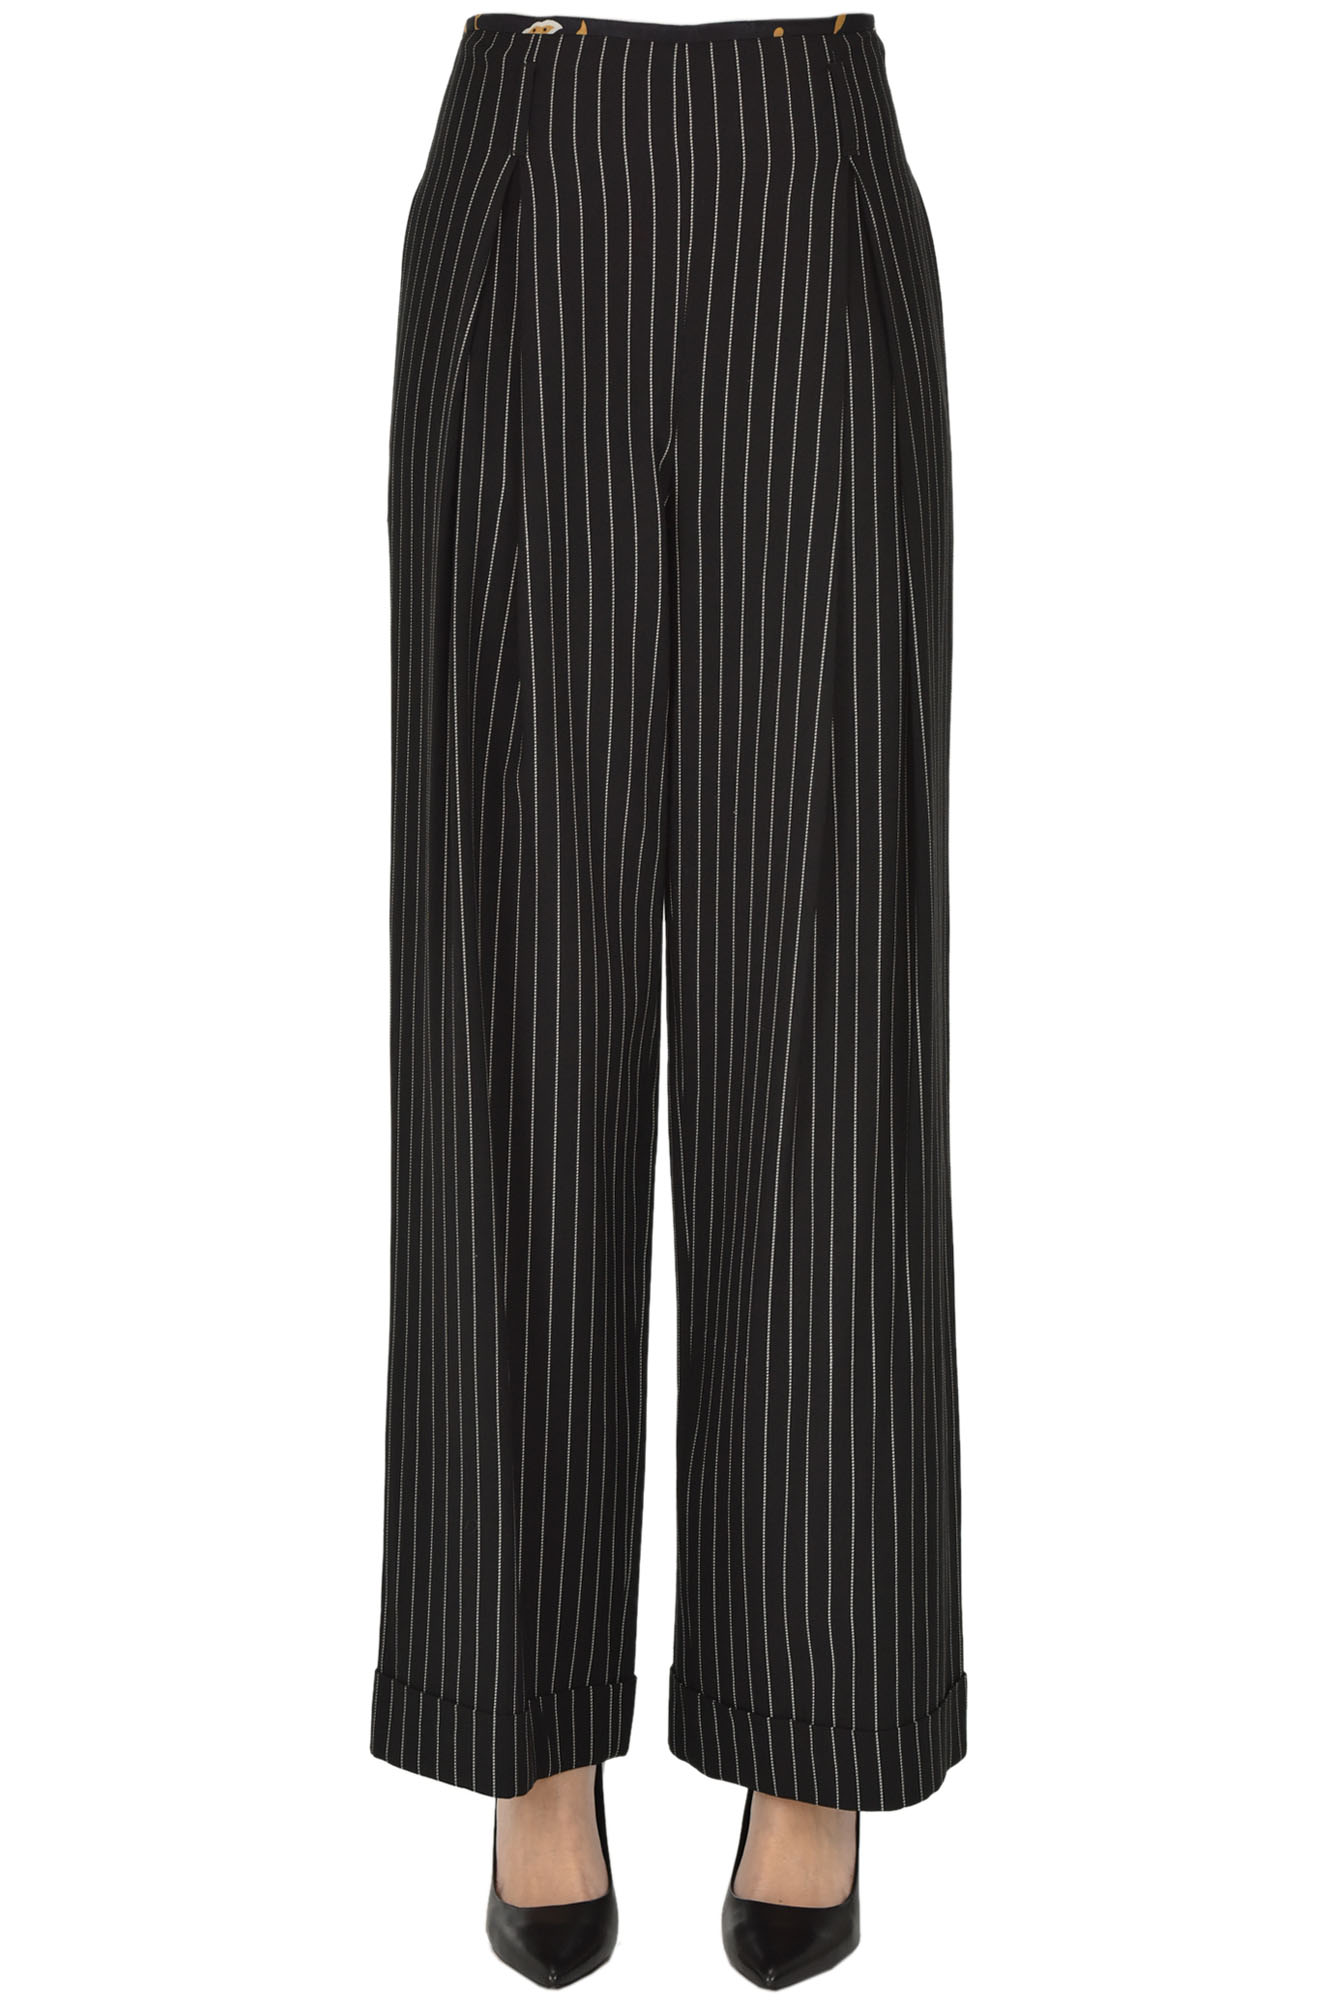 Ibrigu Pinstriped wide leg trousers - Buy online on Glamest Fashion ...